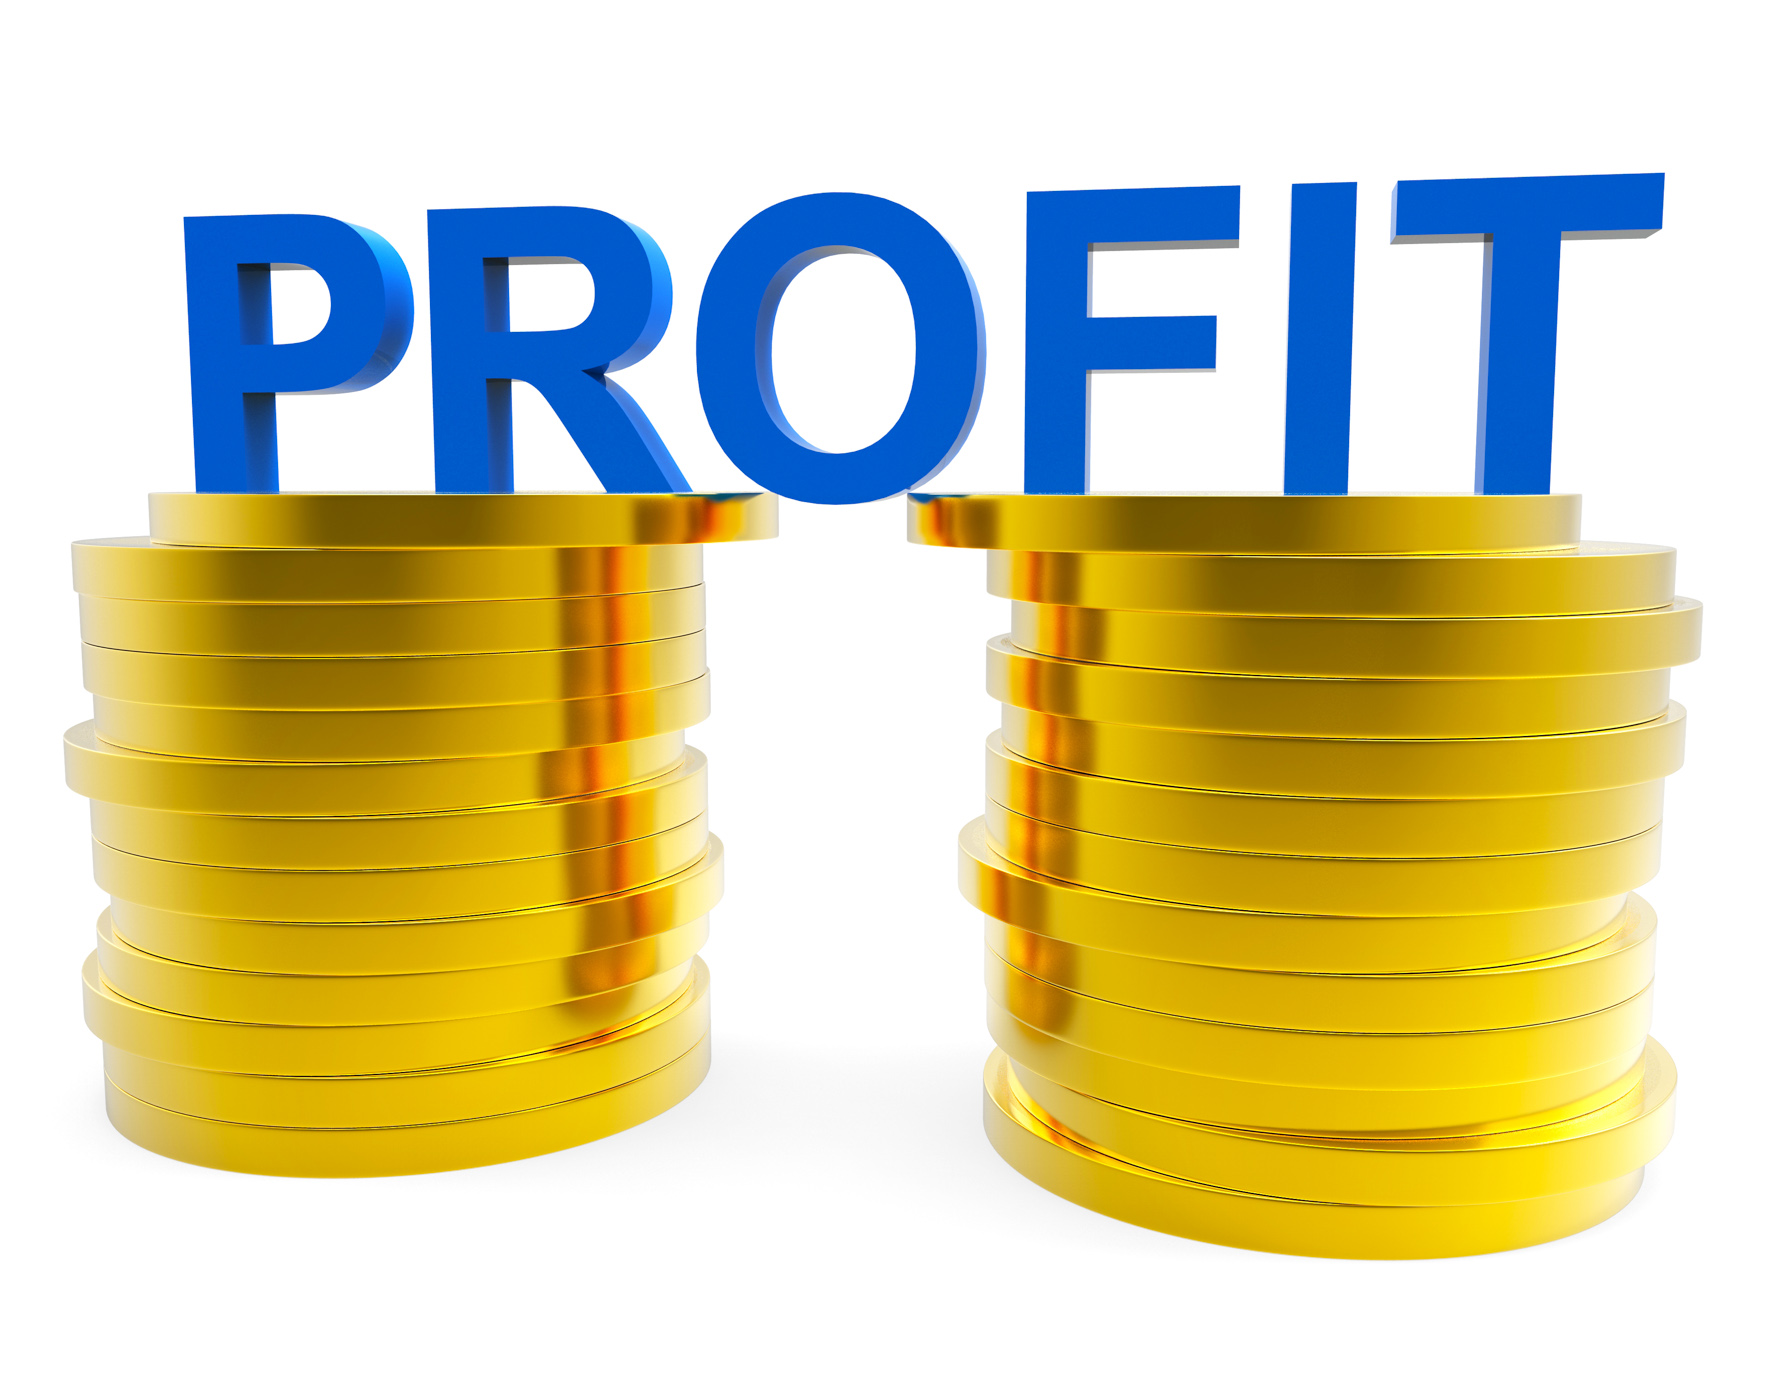 Business profit indicates financial profitable and cash photo